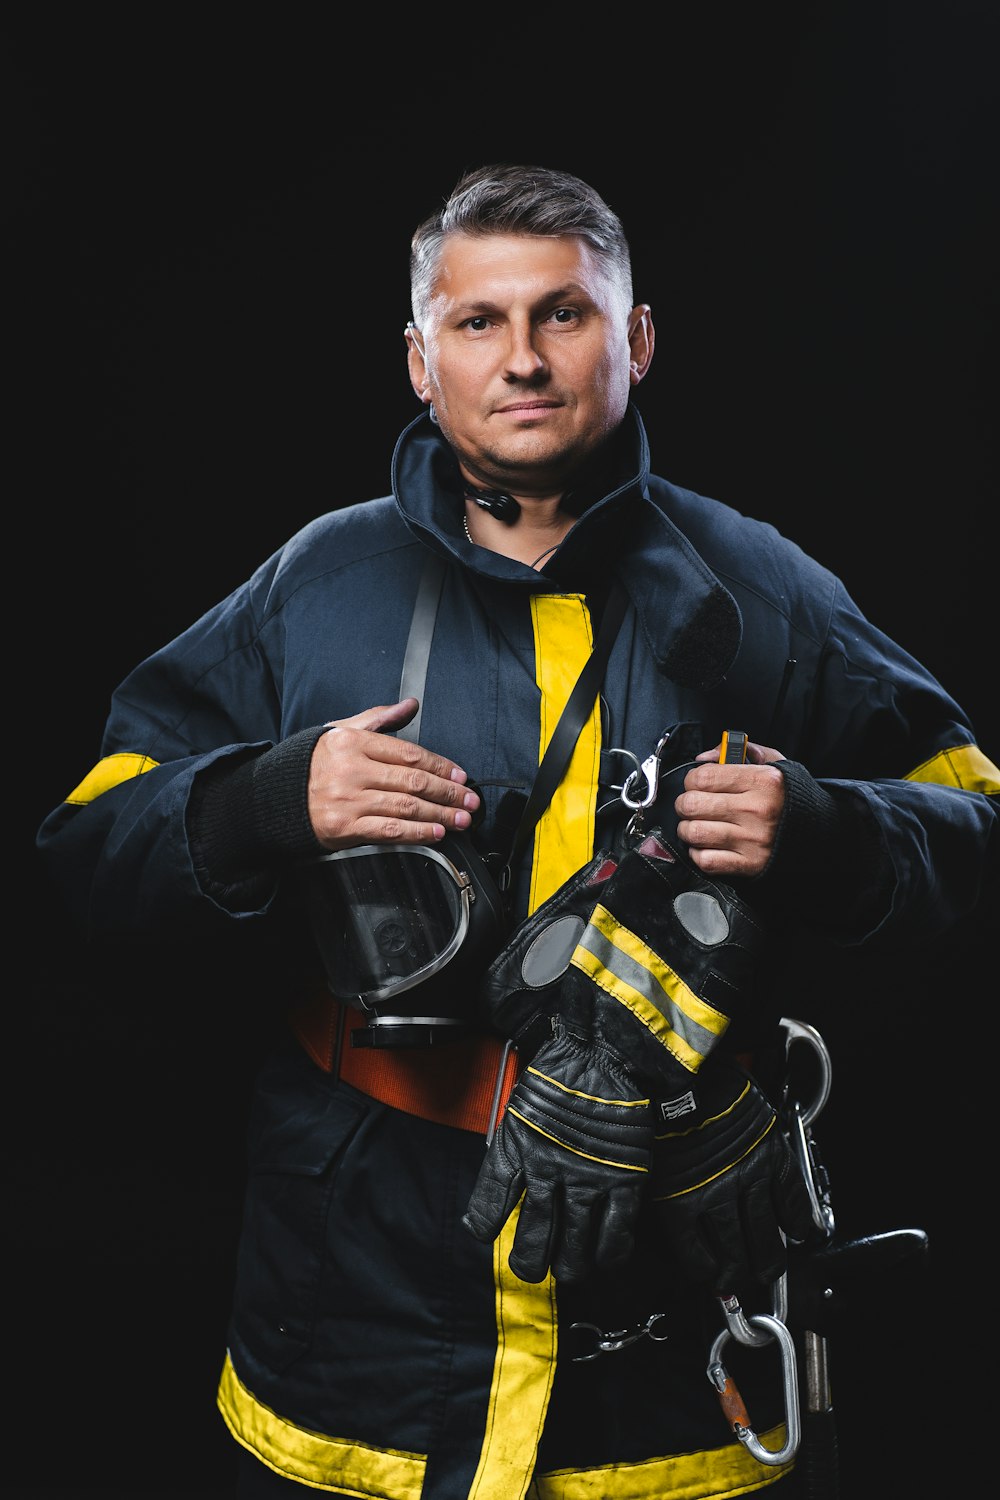 a man in a fireman's uniform holding a pair of gloves